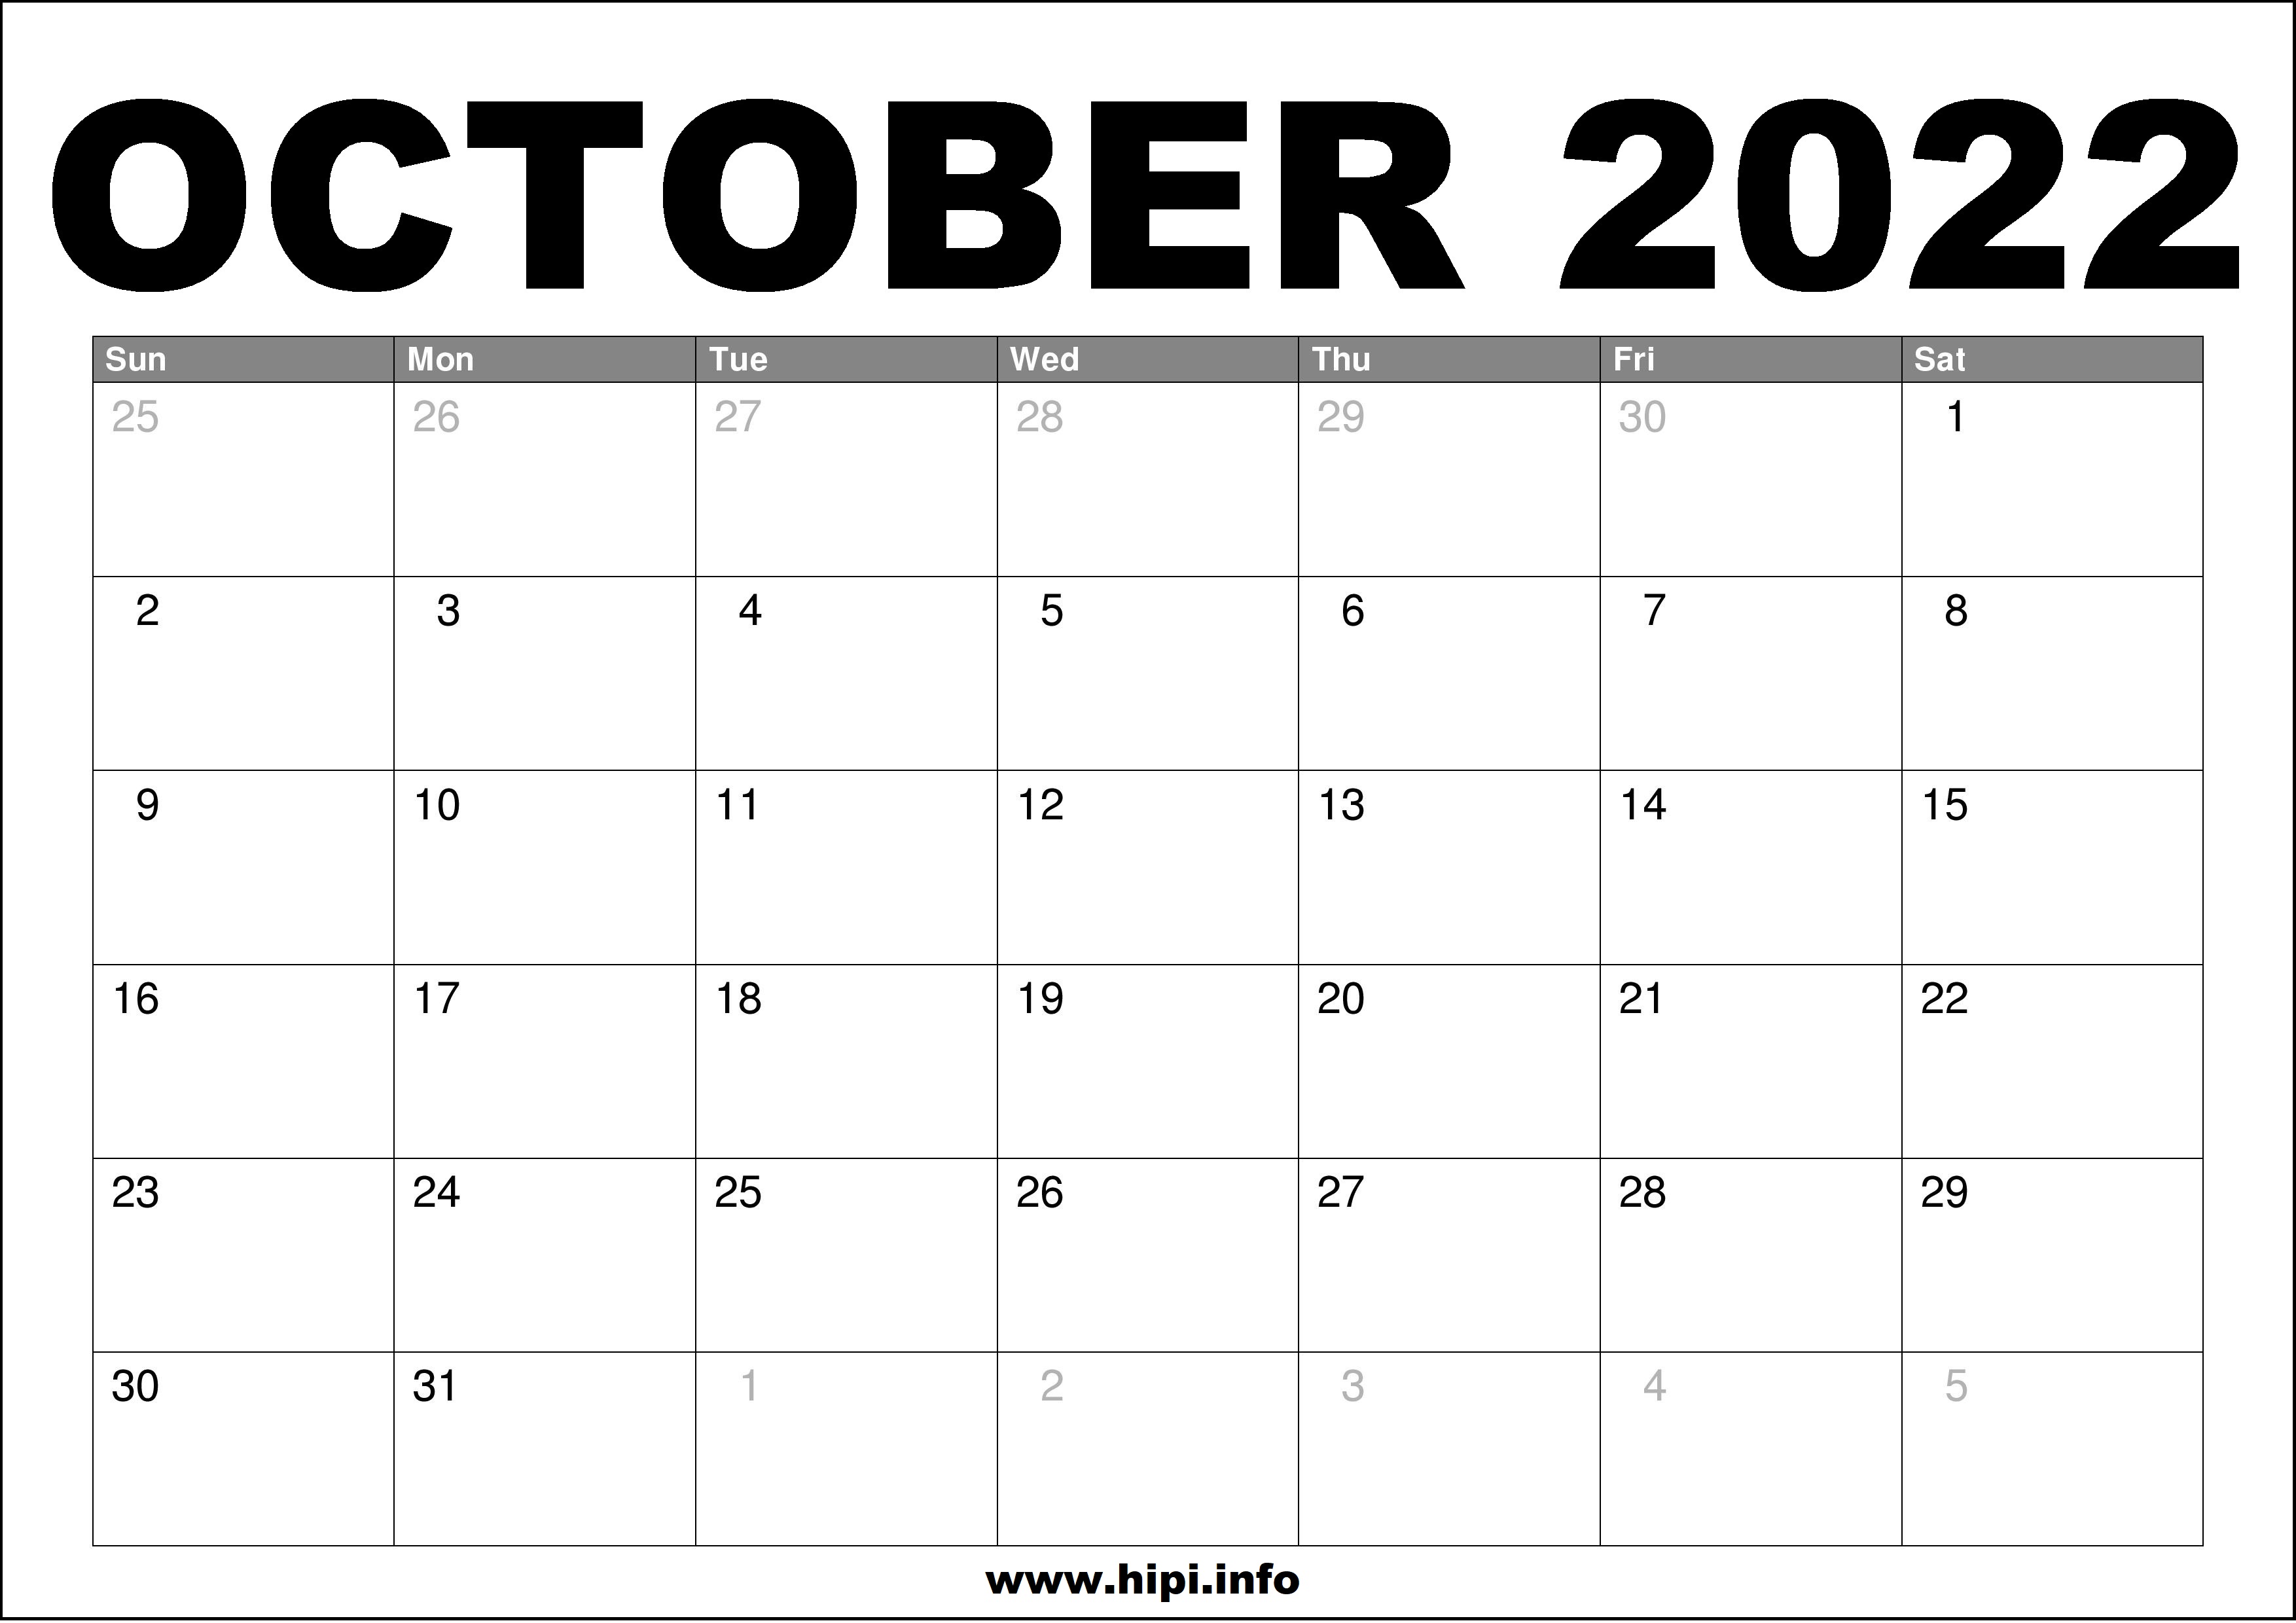 October 2022 Free Printable Calendar October 2022 Calendar Printable Free - Hipi.info | Calendars Printable Free